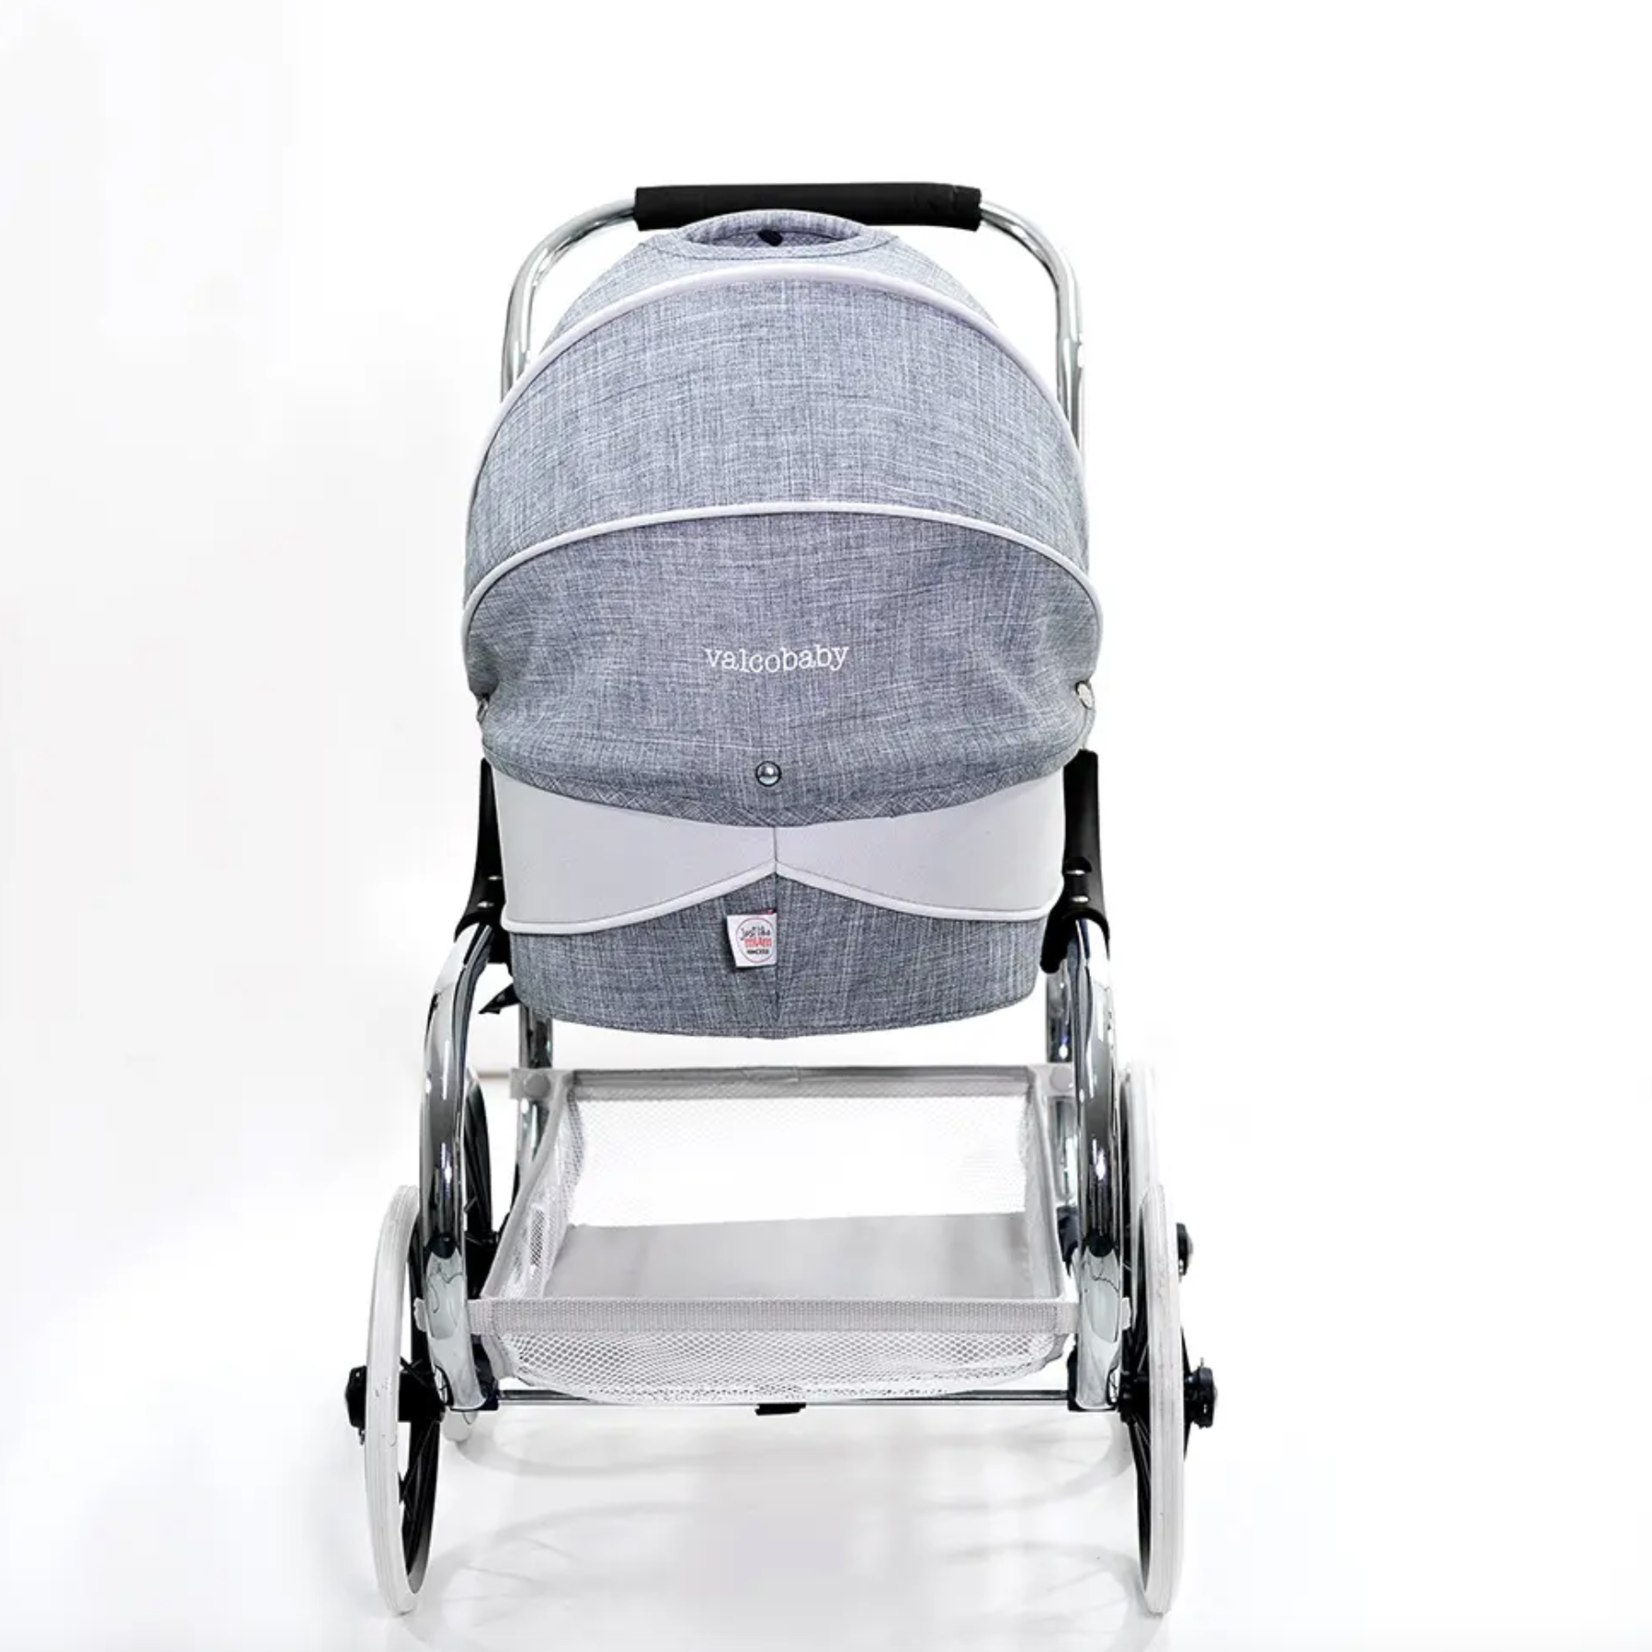 Valco Baby Princess doll stroller-Grey Marle(white/grey)(T0085)